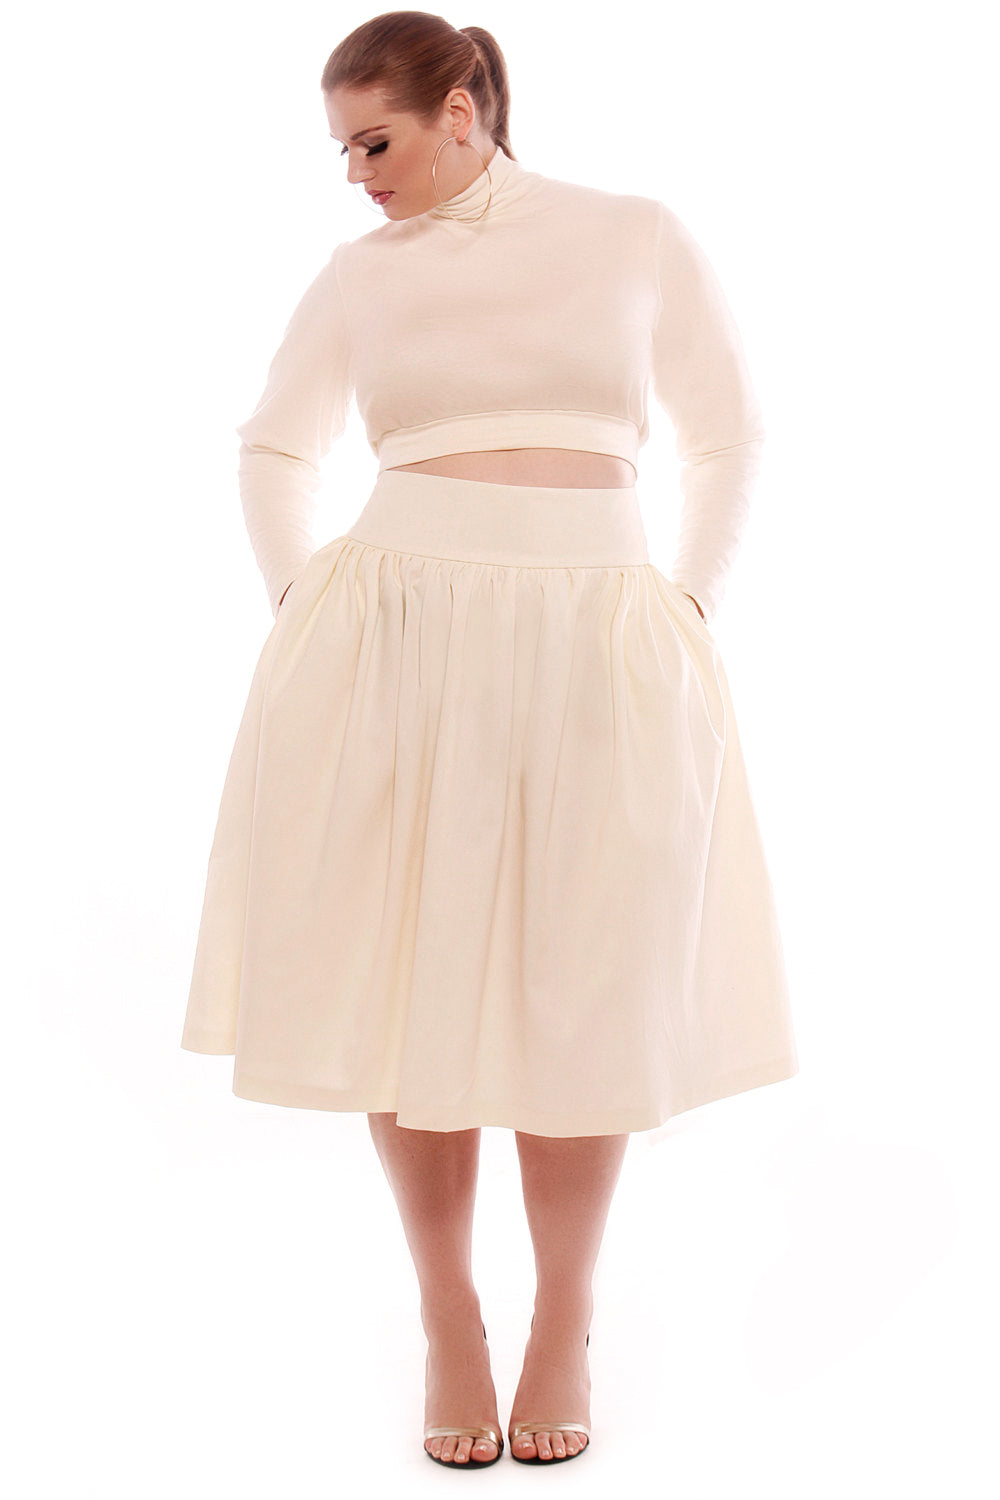 High Waist Flare Skirt Jibri Online 6899